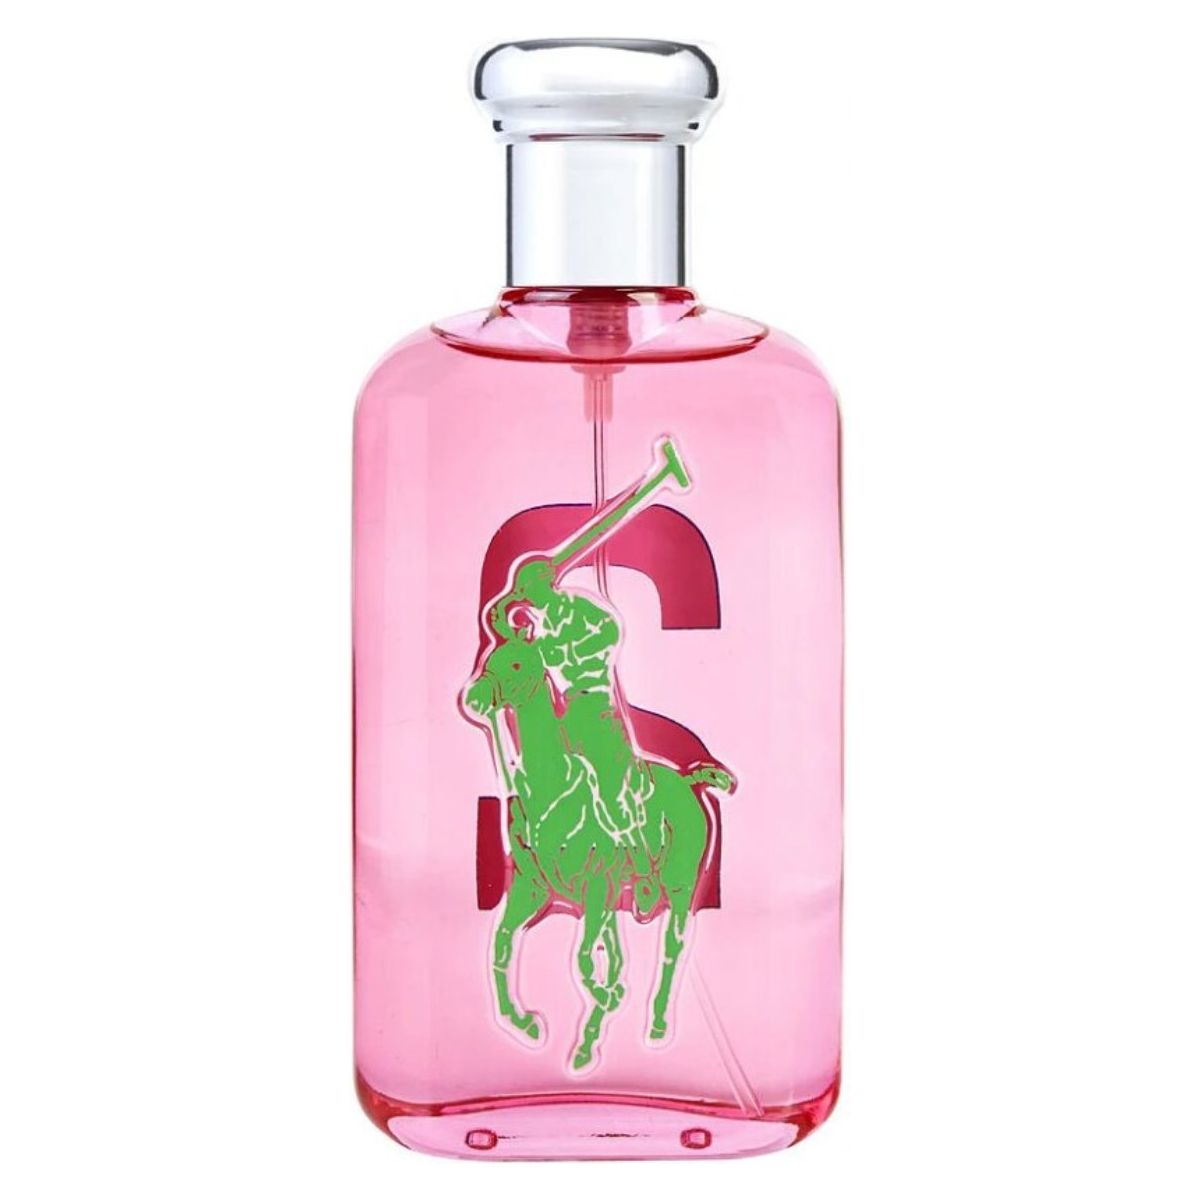 Polo Big Pony 2 by Ralph Lauren EDT Spray for Women (Pink) 1.7 Oz